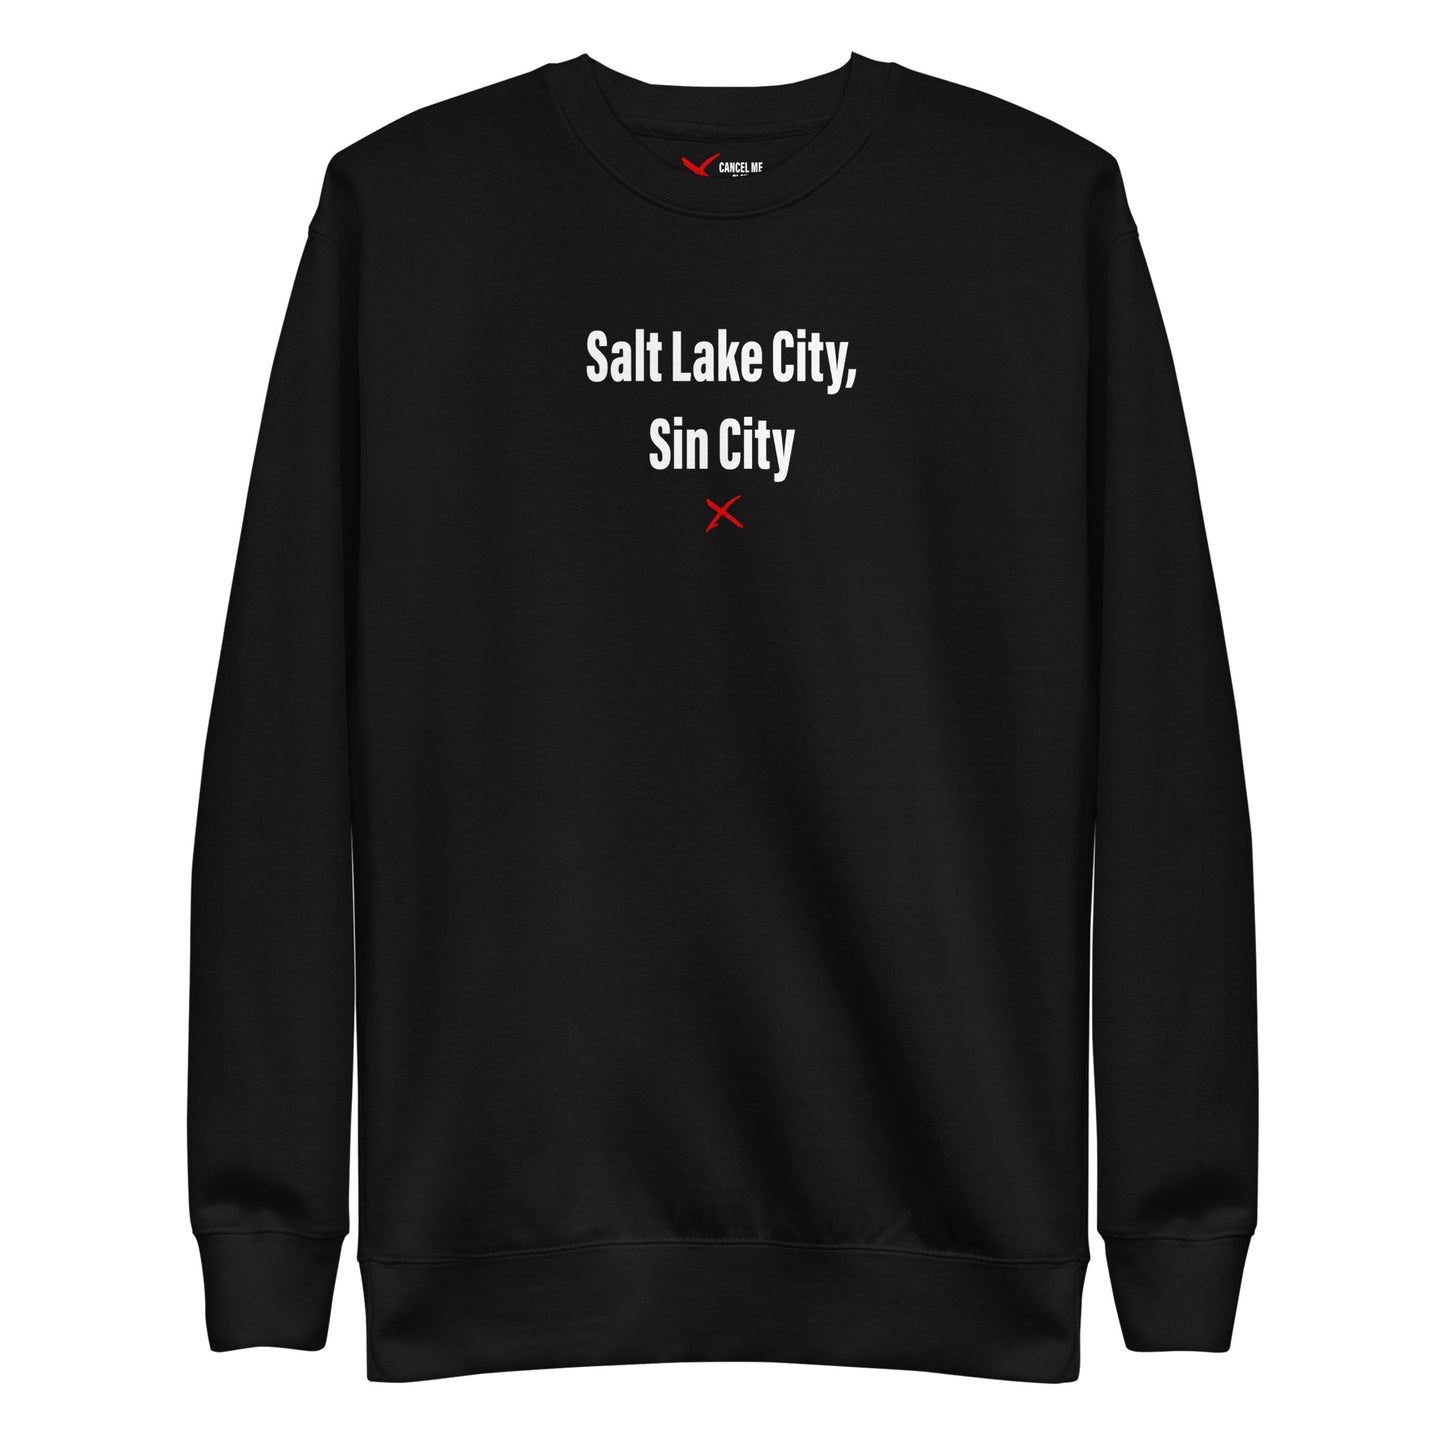 Salt Lake City, Sin City - Sweatshirt